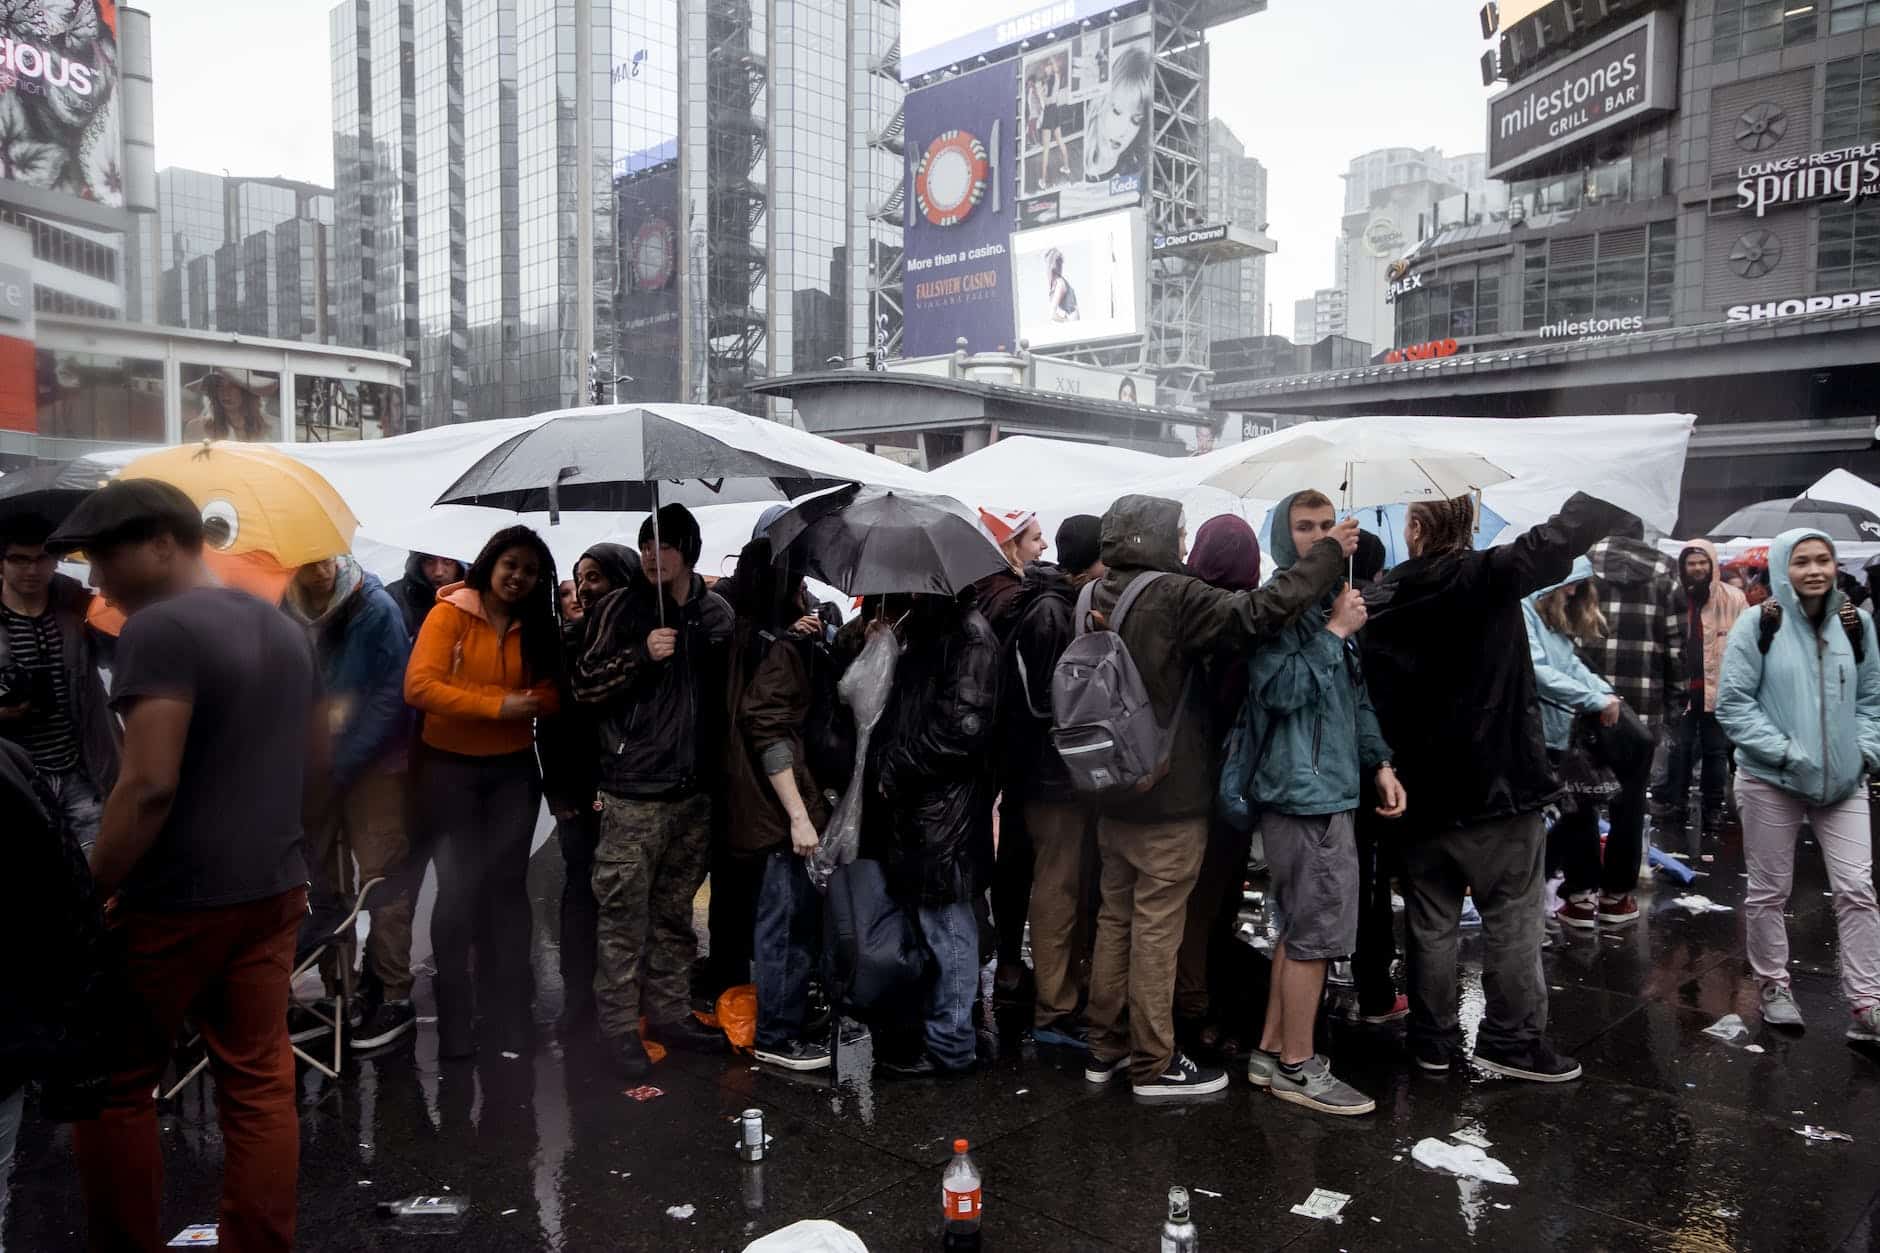 crowd of people standing under umbrellas